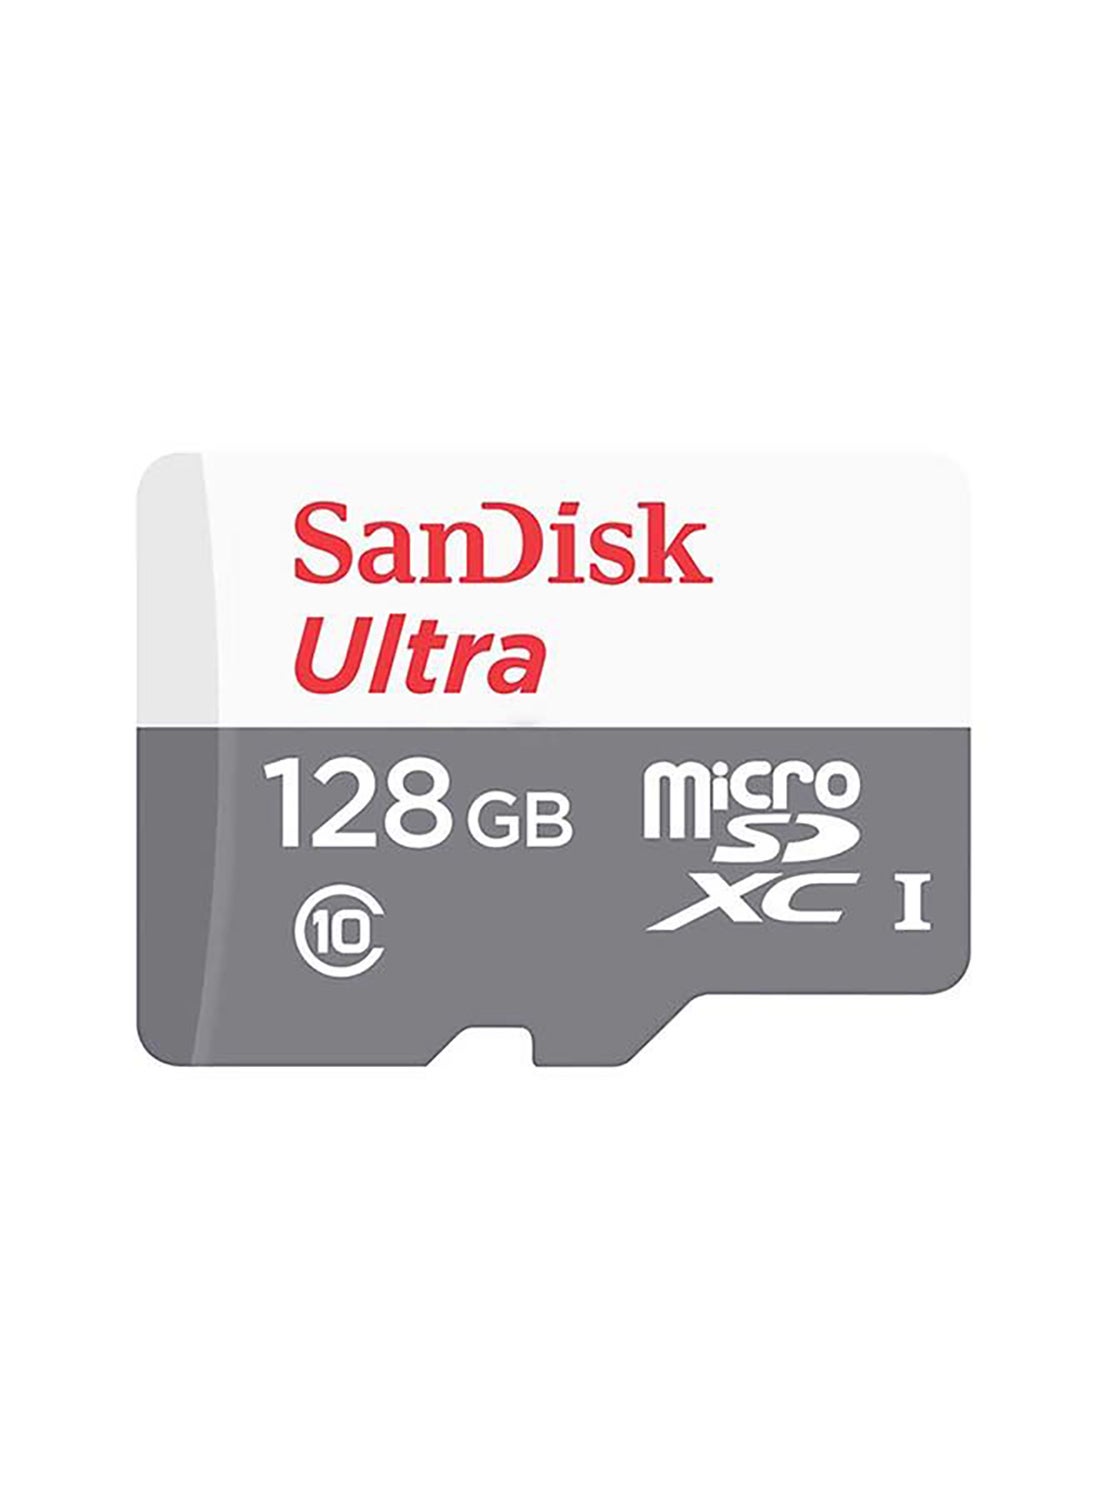 Ultra MicroSDXC UHS-1 Memory Card 128 GB 